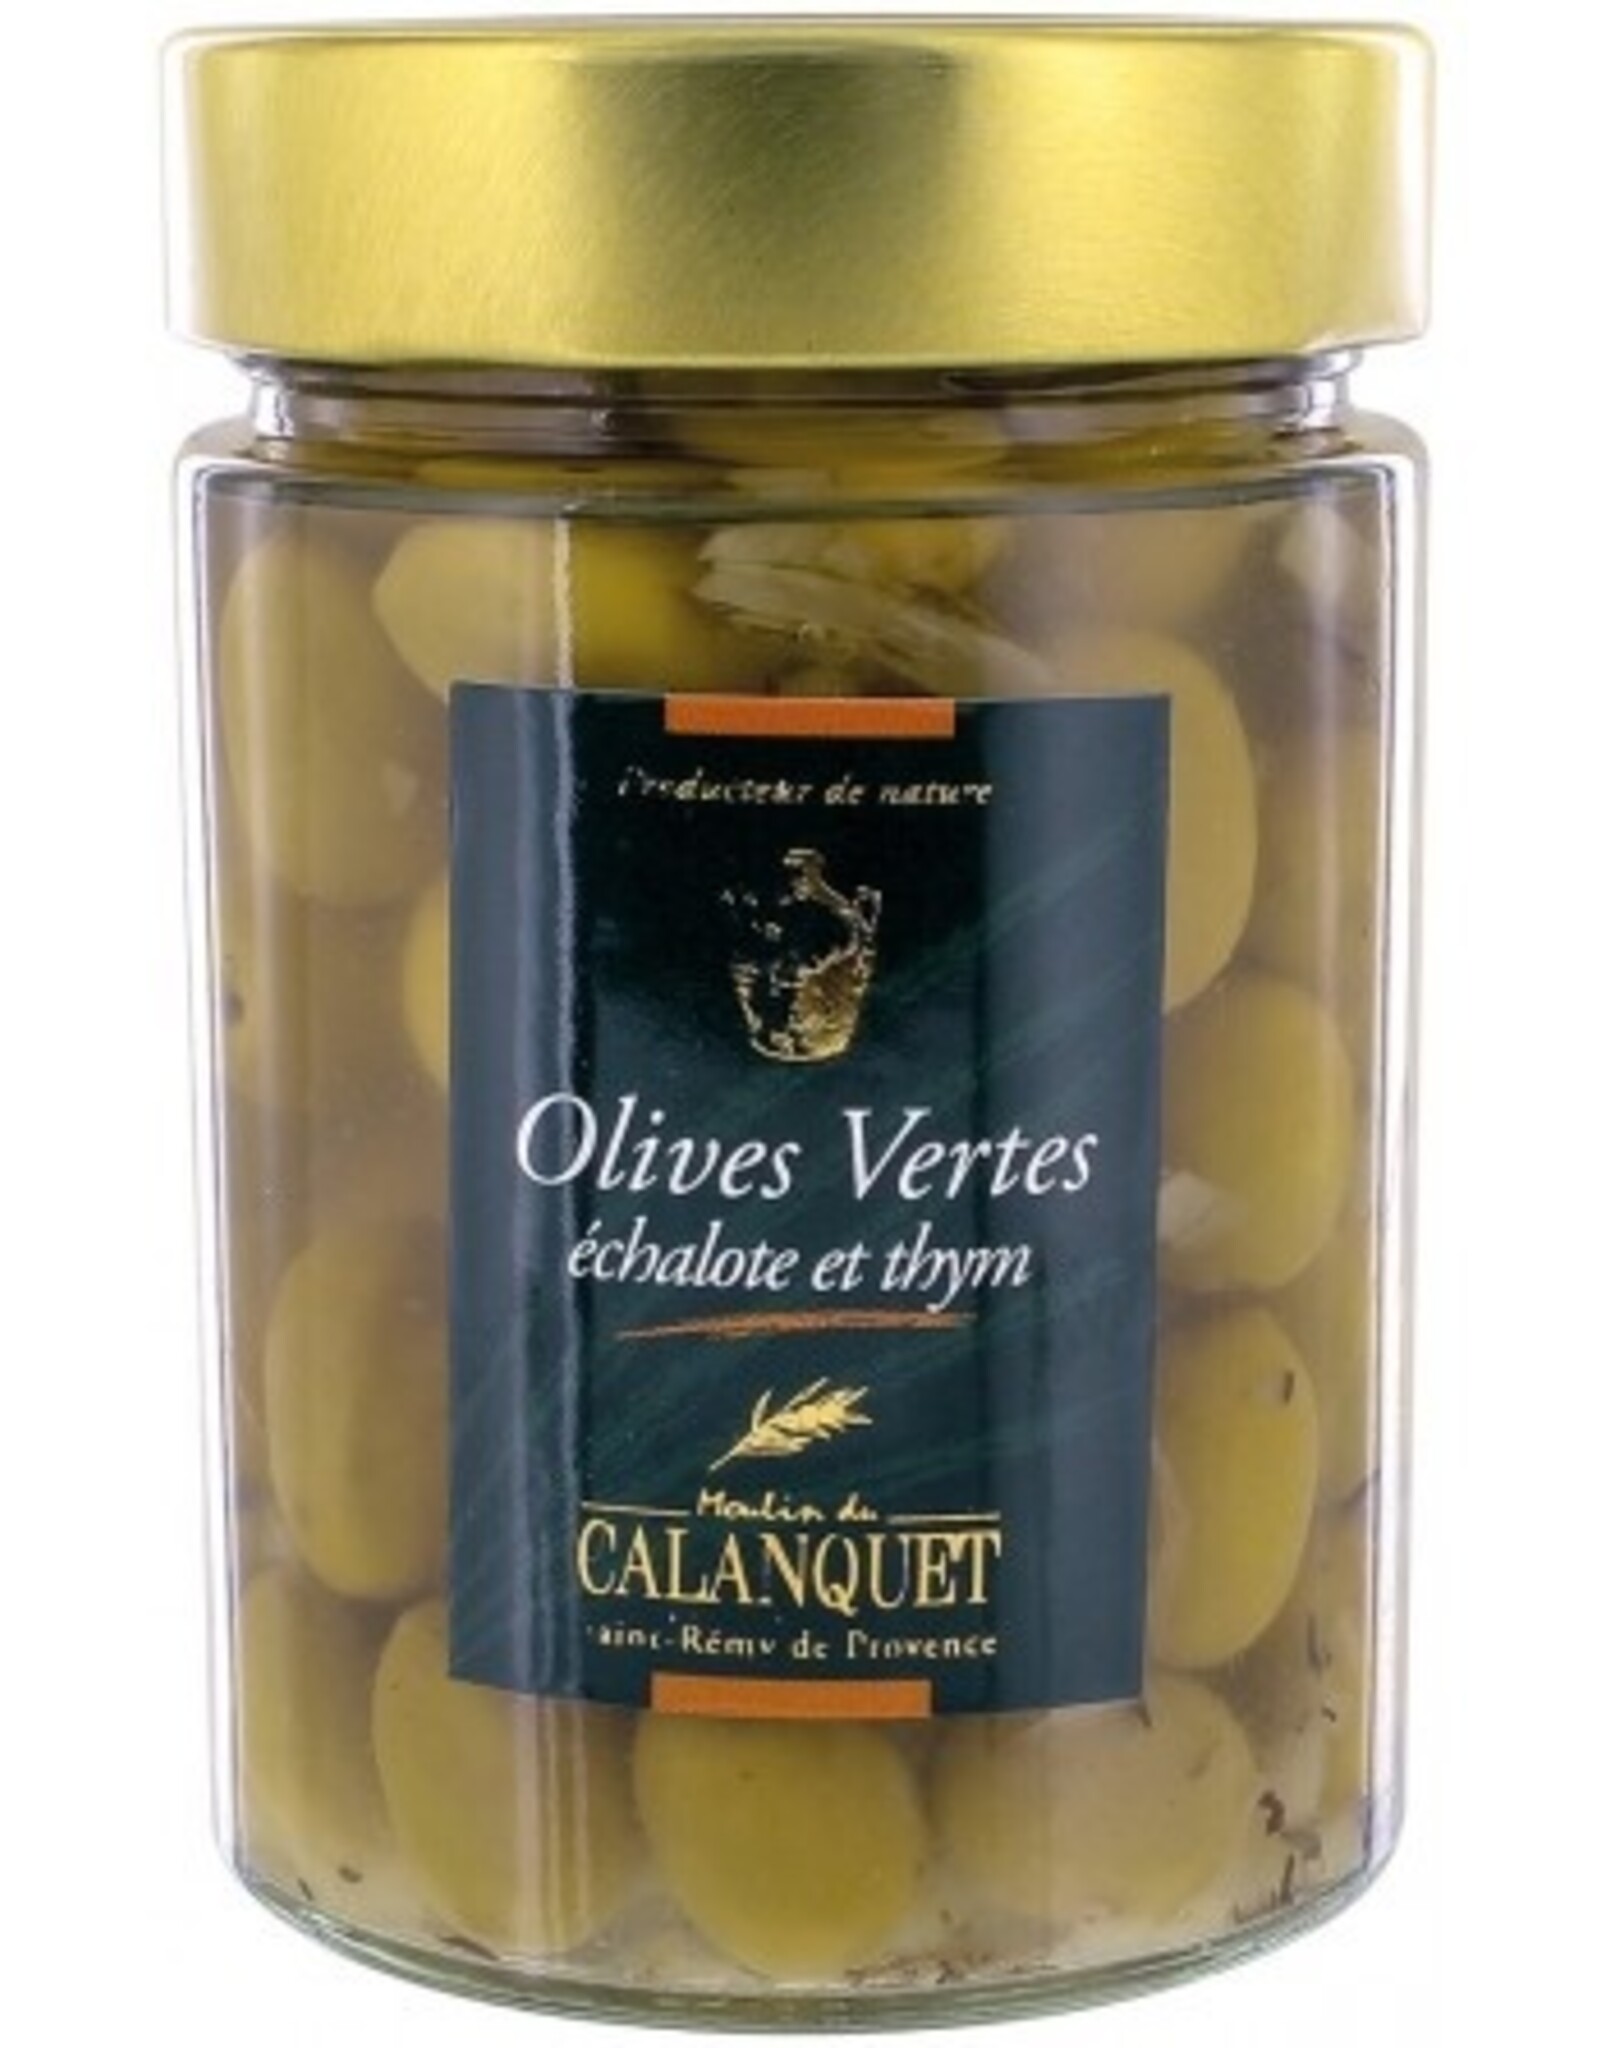 Moulin du Calanquet Olives Échalotte et Thym / Olives Shallot & Thyme 175 g